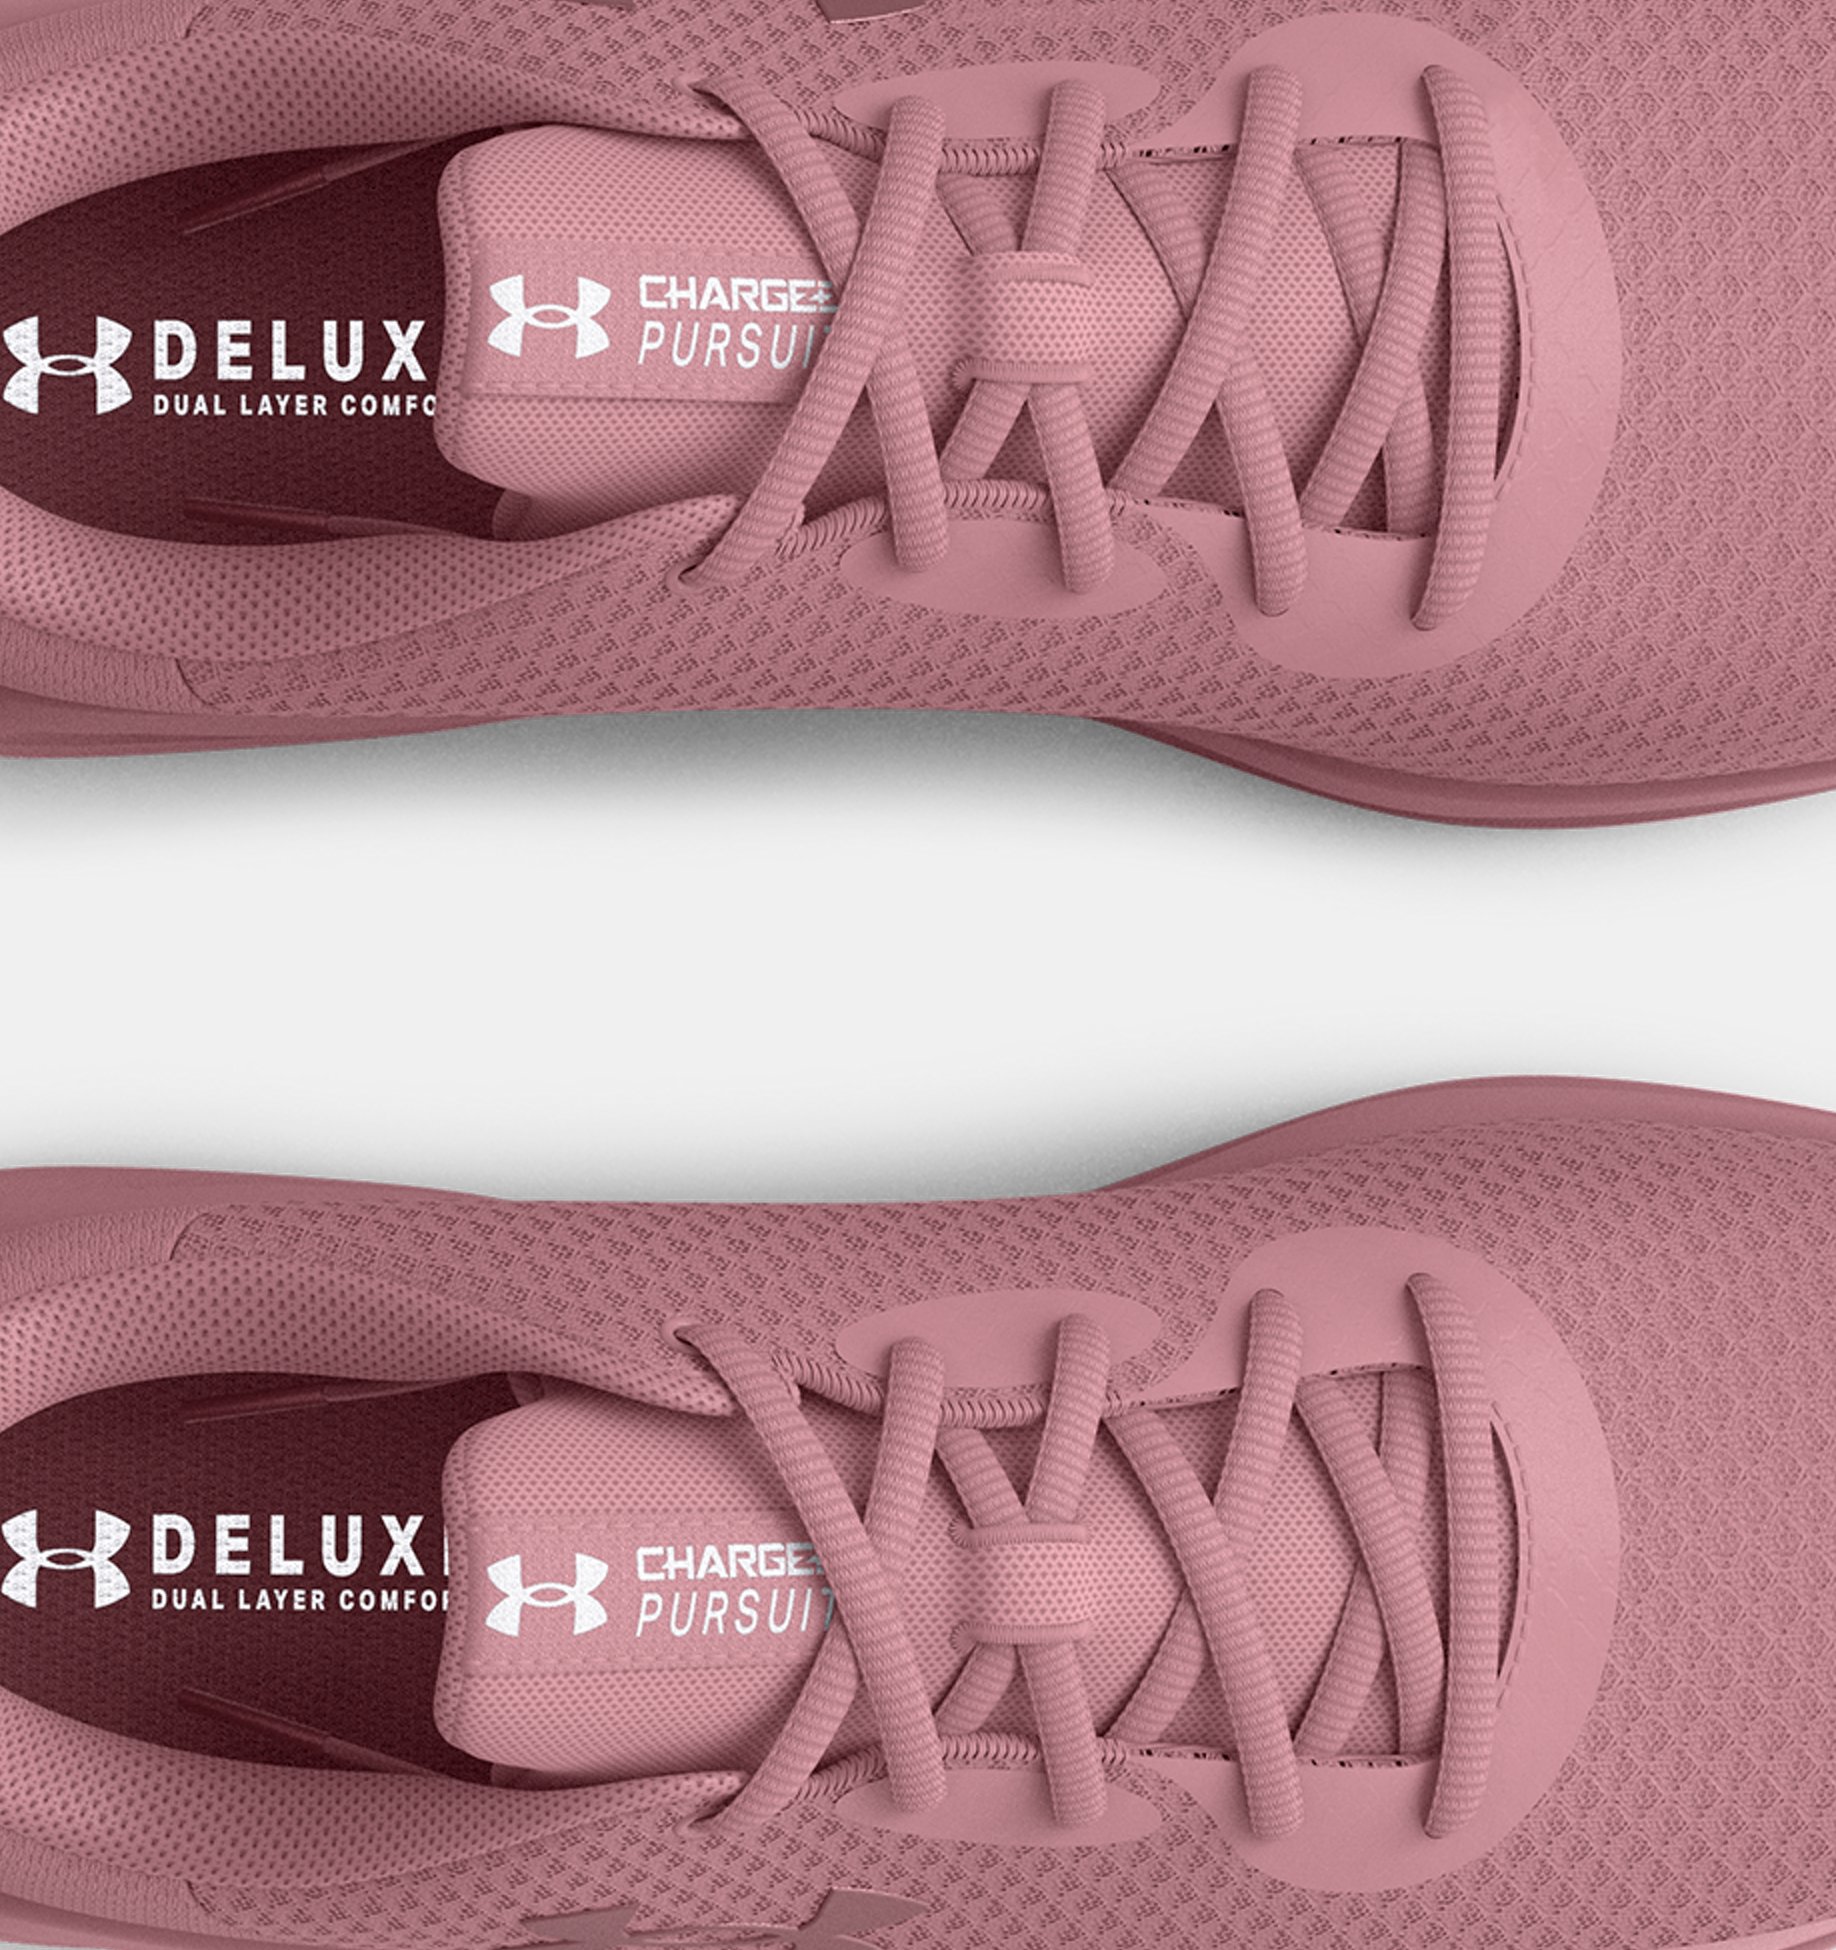 Belichamen mengen Reductor Women's UA Charged Pursuit 3 Running Shoes | Under Armour